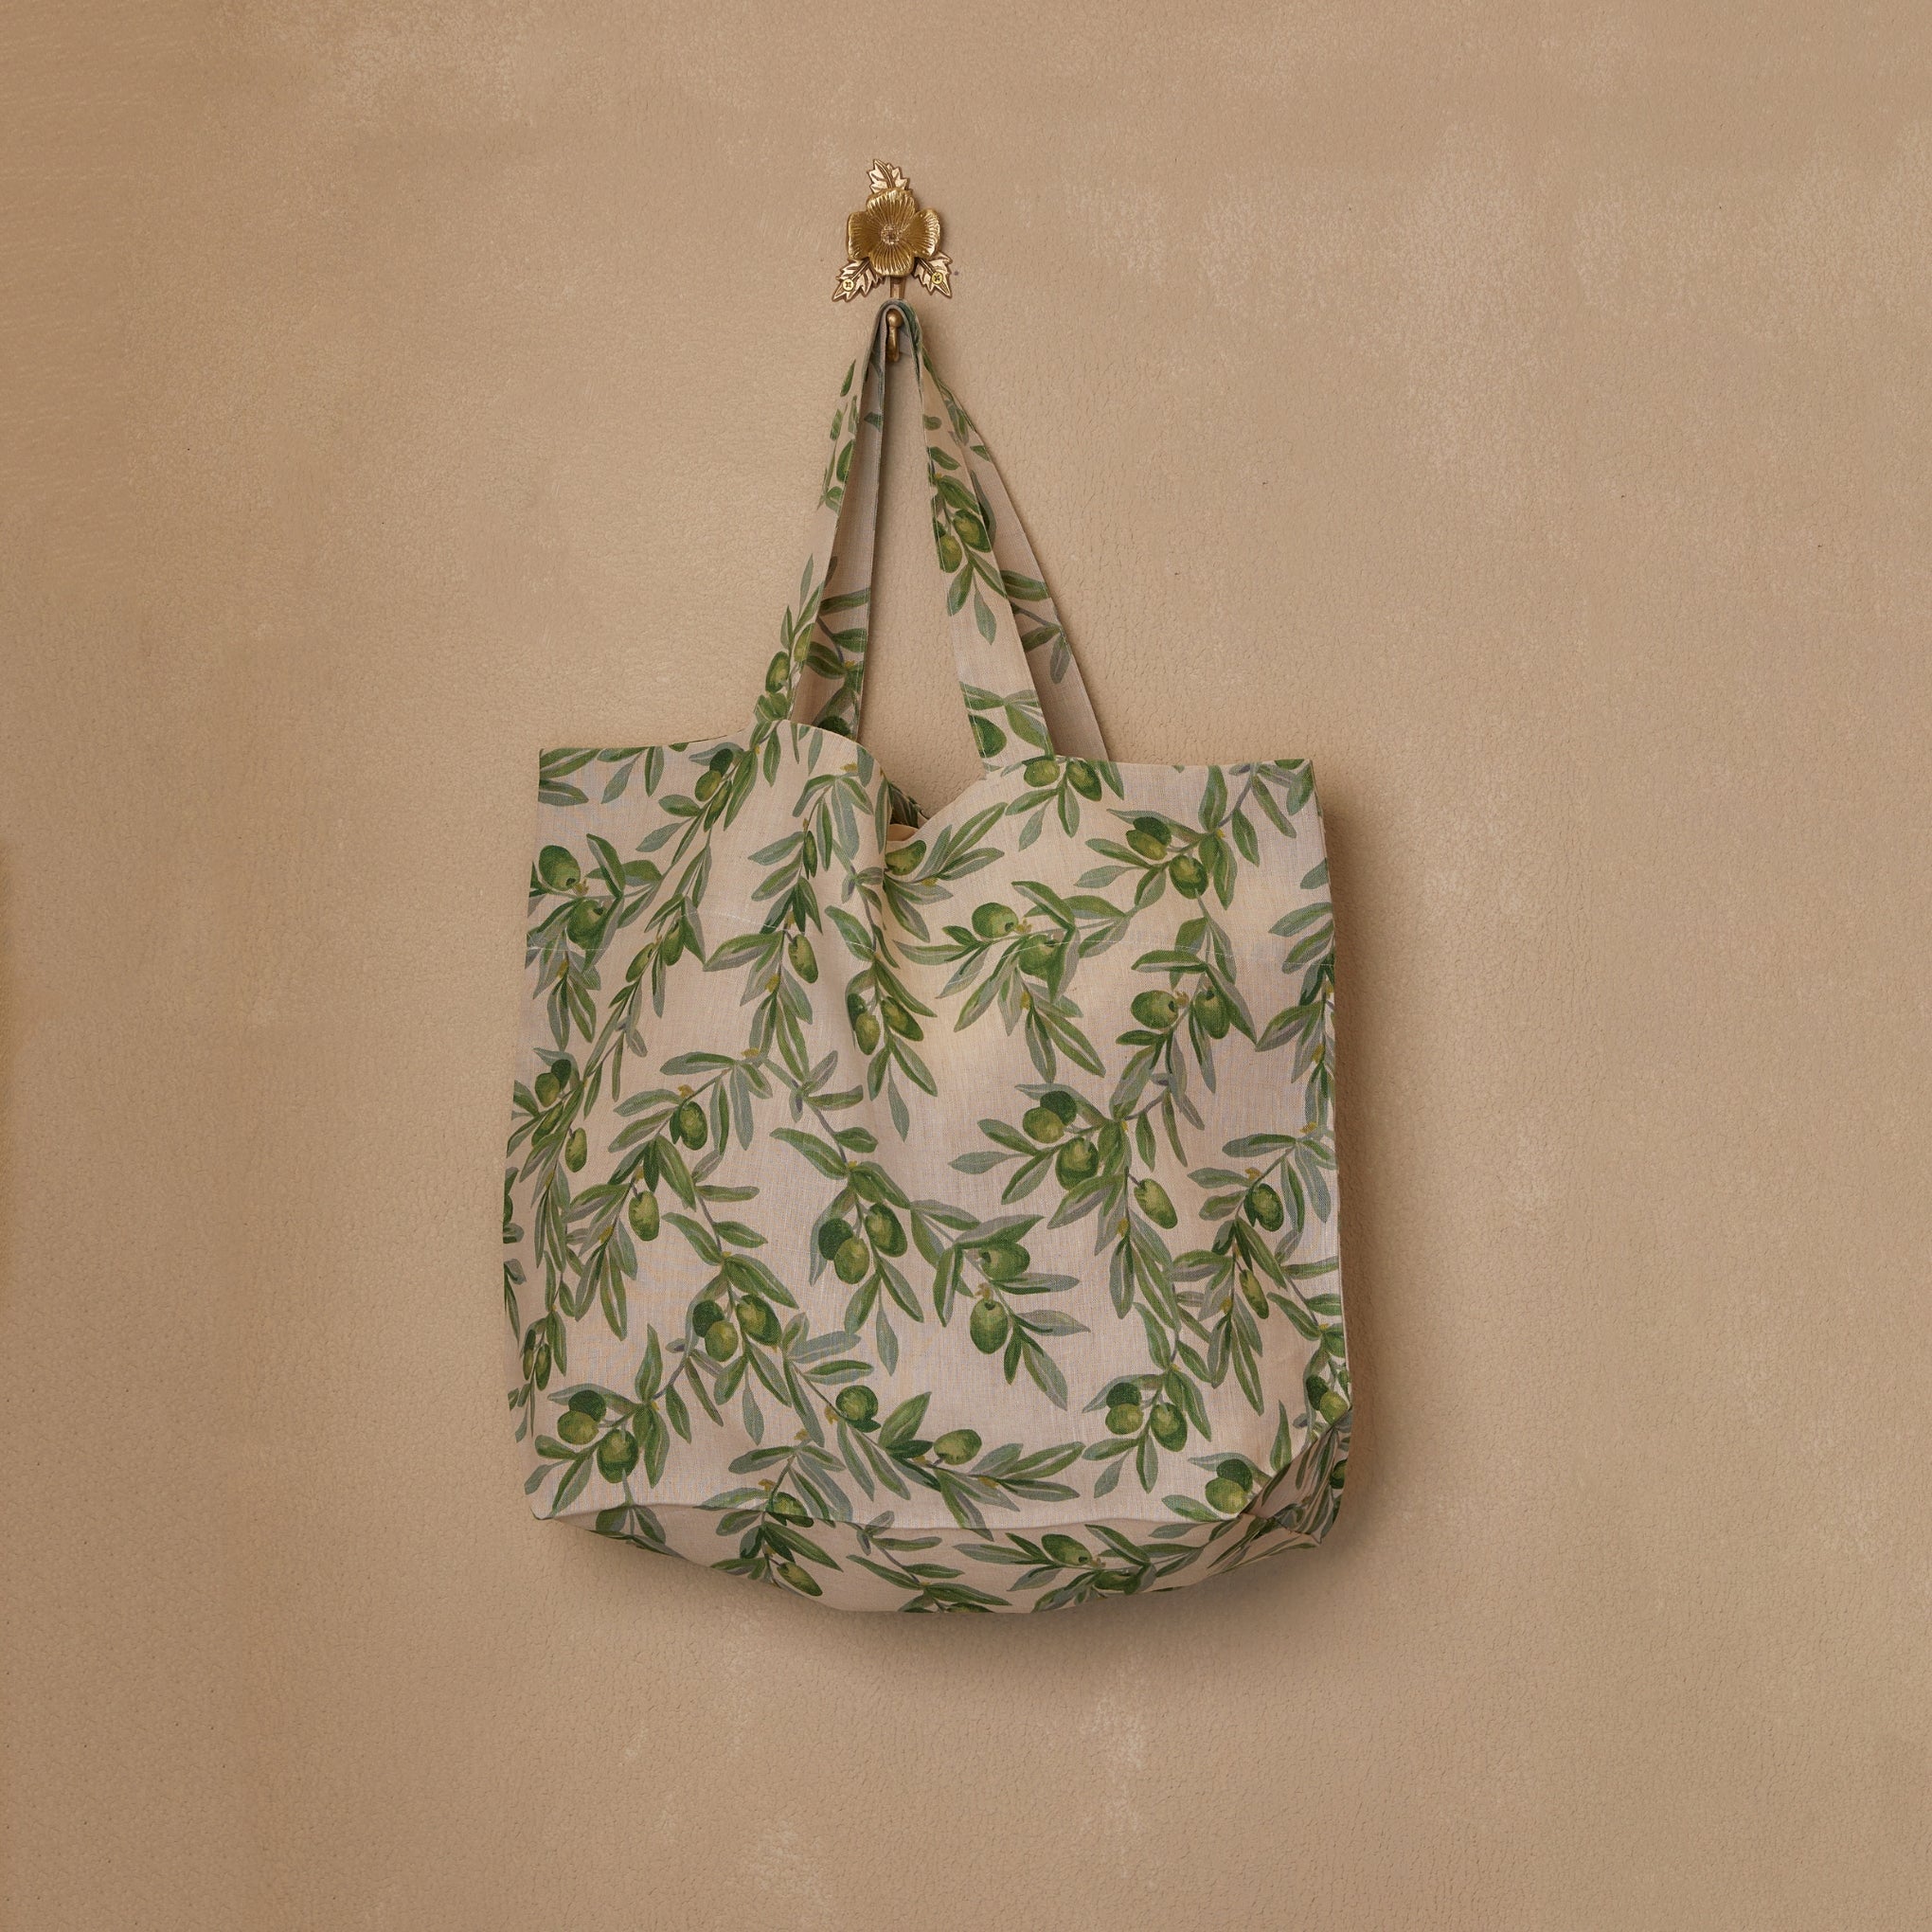 Olive Green Tote Bag